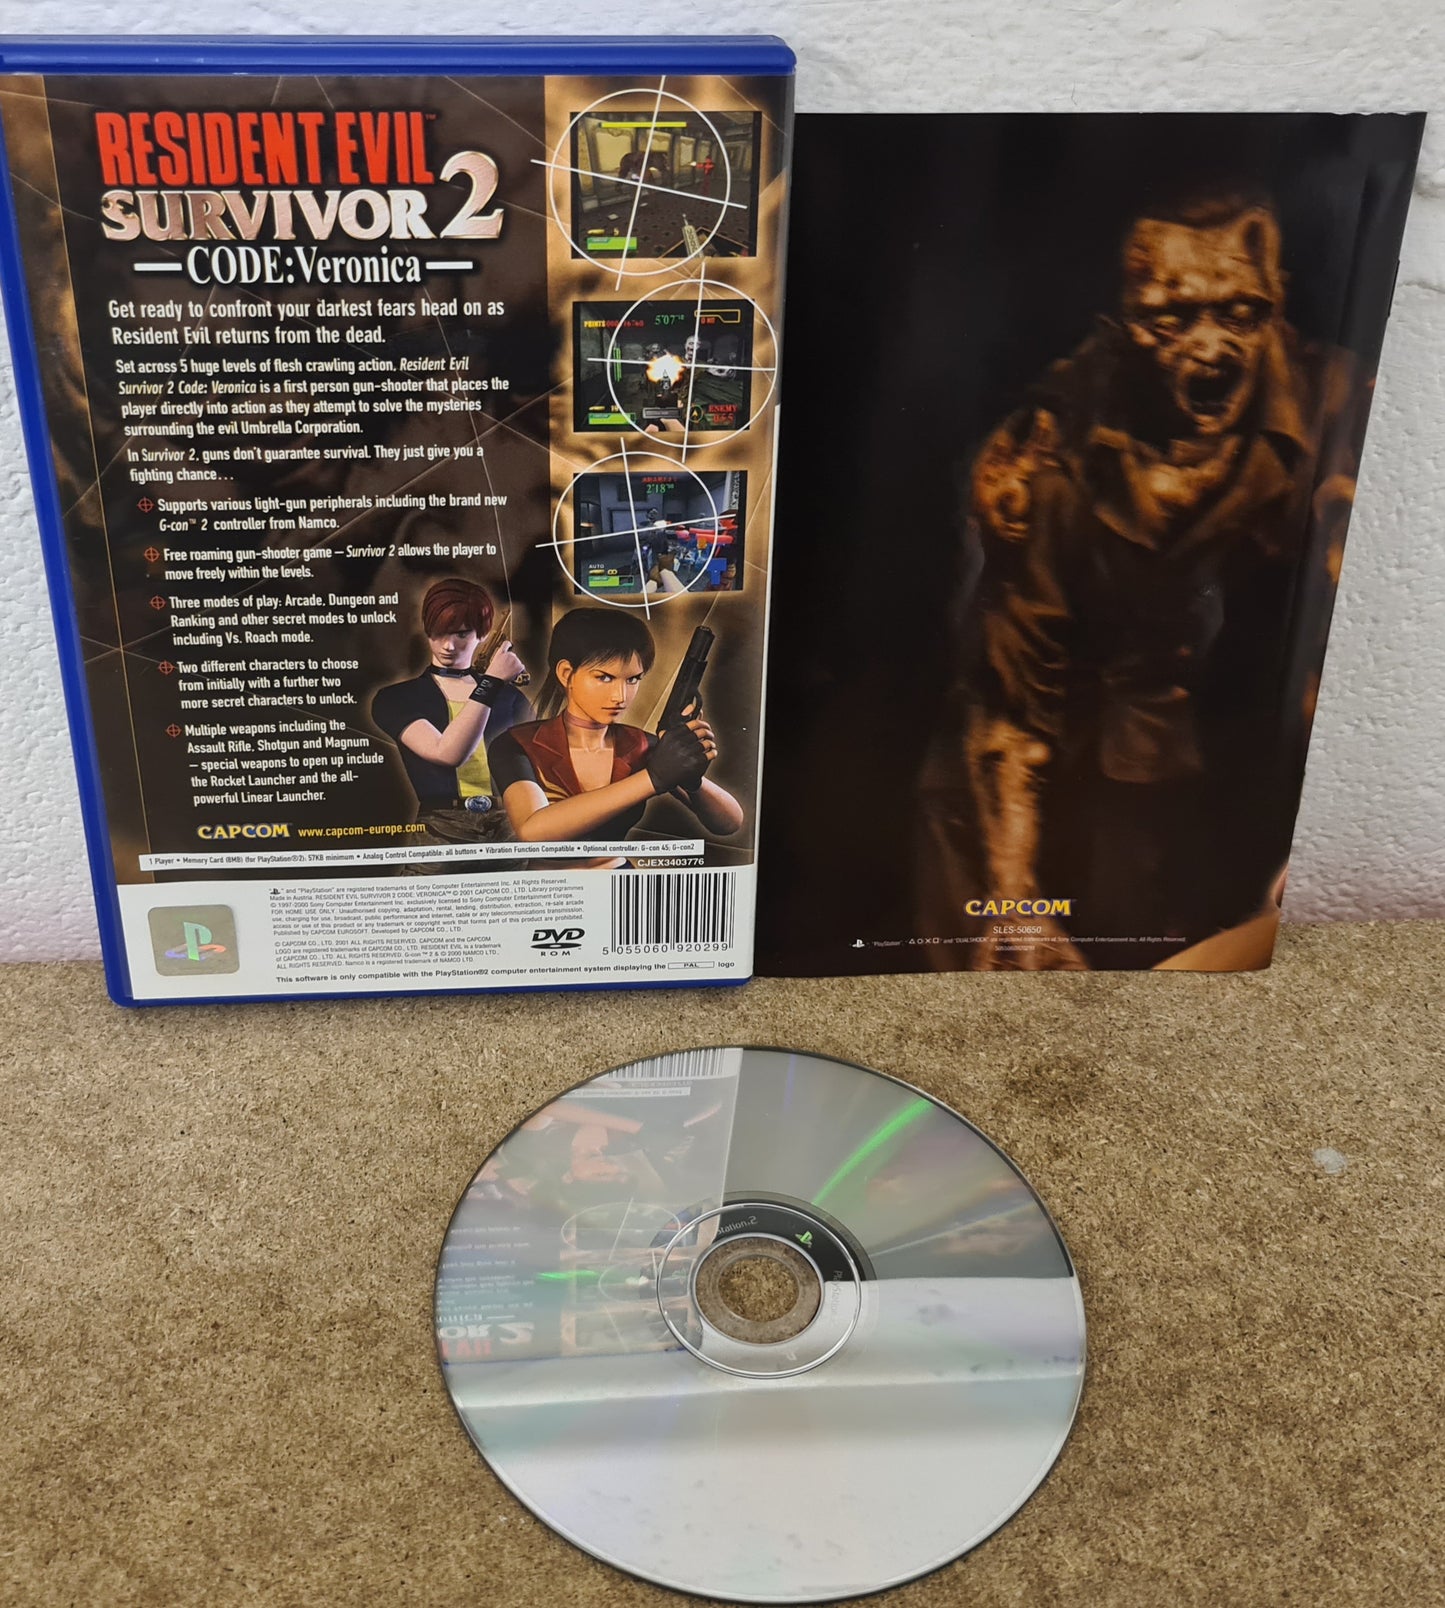 Resident Evil Survivor 2 Code Veronica Sony Playstation 2 (PS2) Game